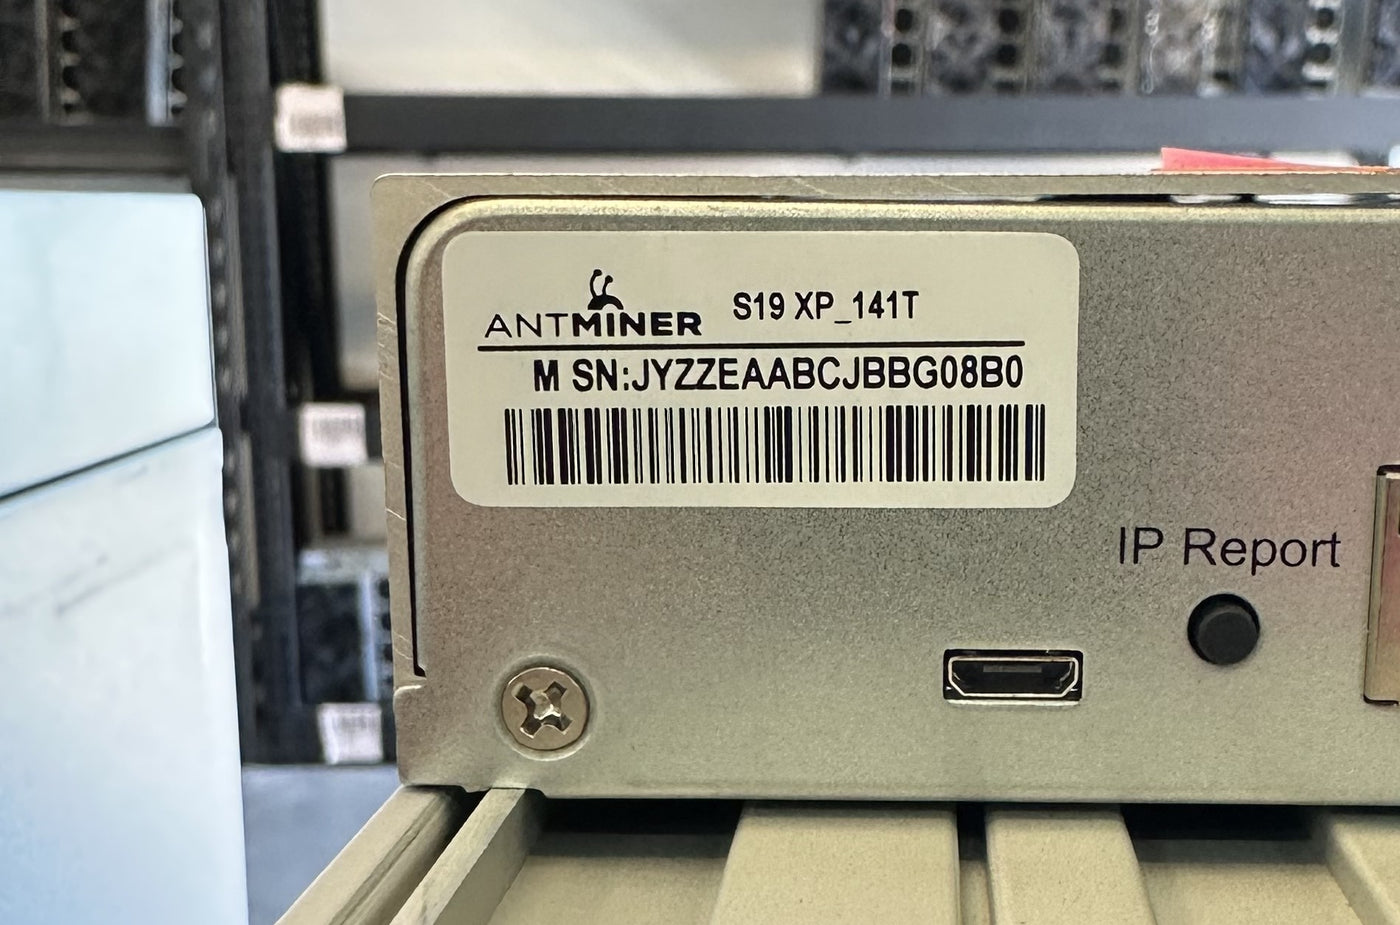 $.075 Hosting - Split Shares Beta - NEW Bitmain Antminer S19 XP 141 TH/s - Serial # JYZZEAABCJBBG08B0